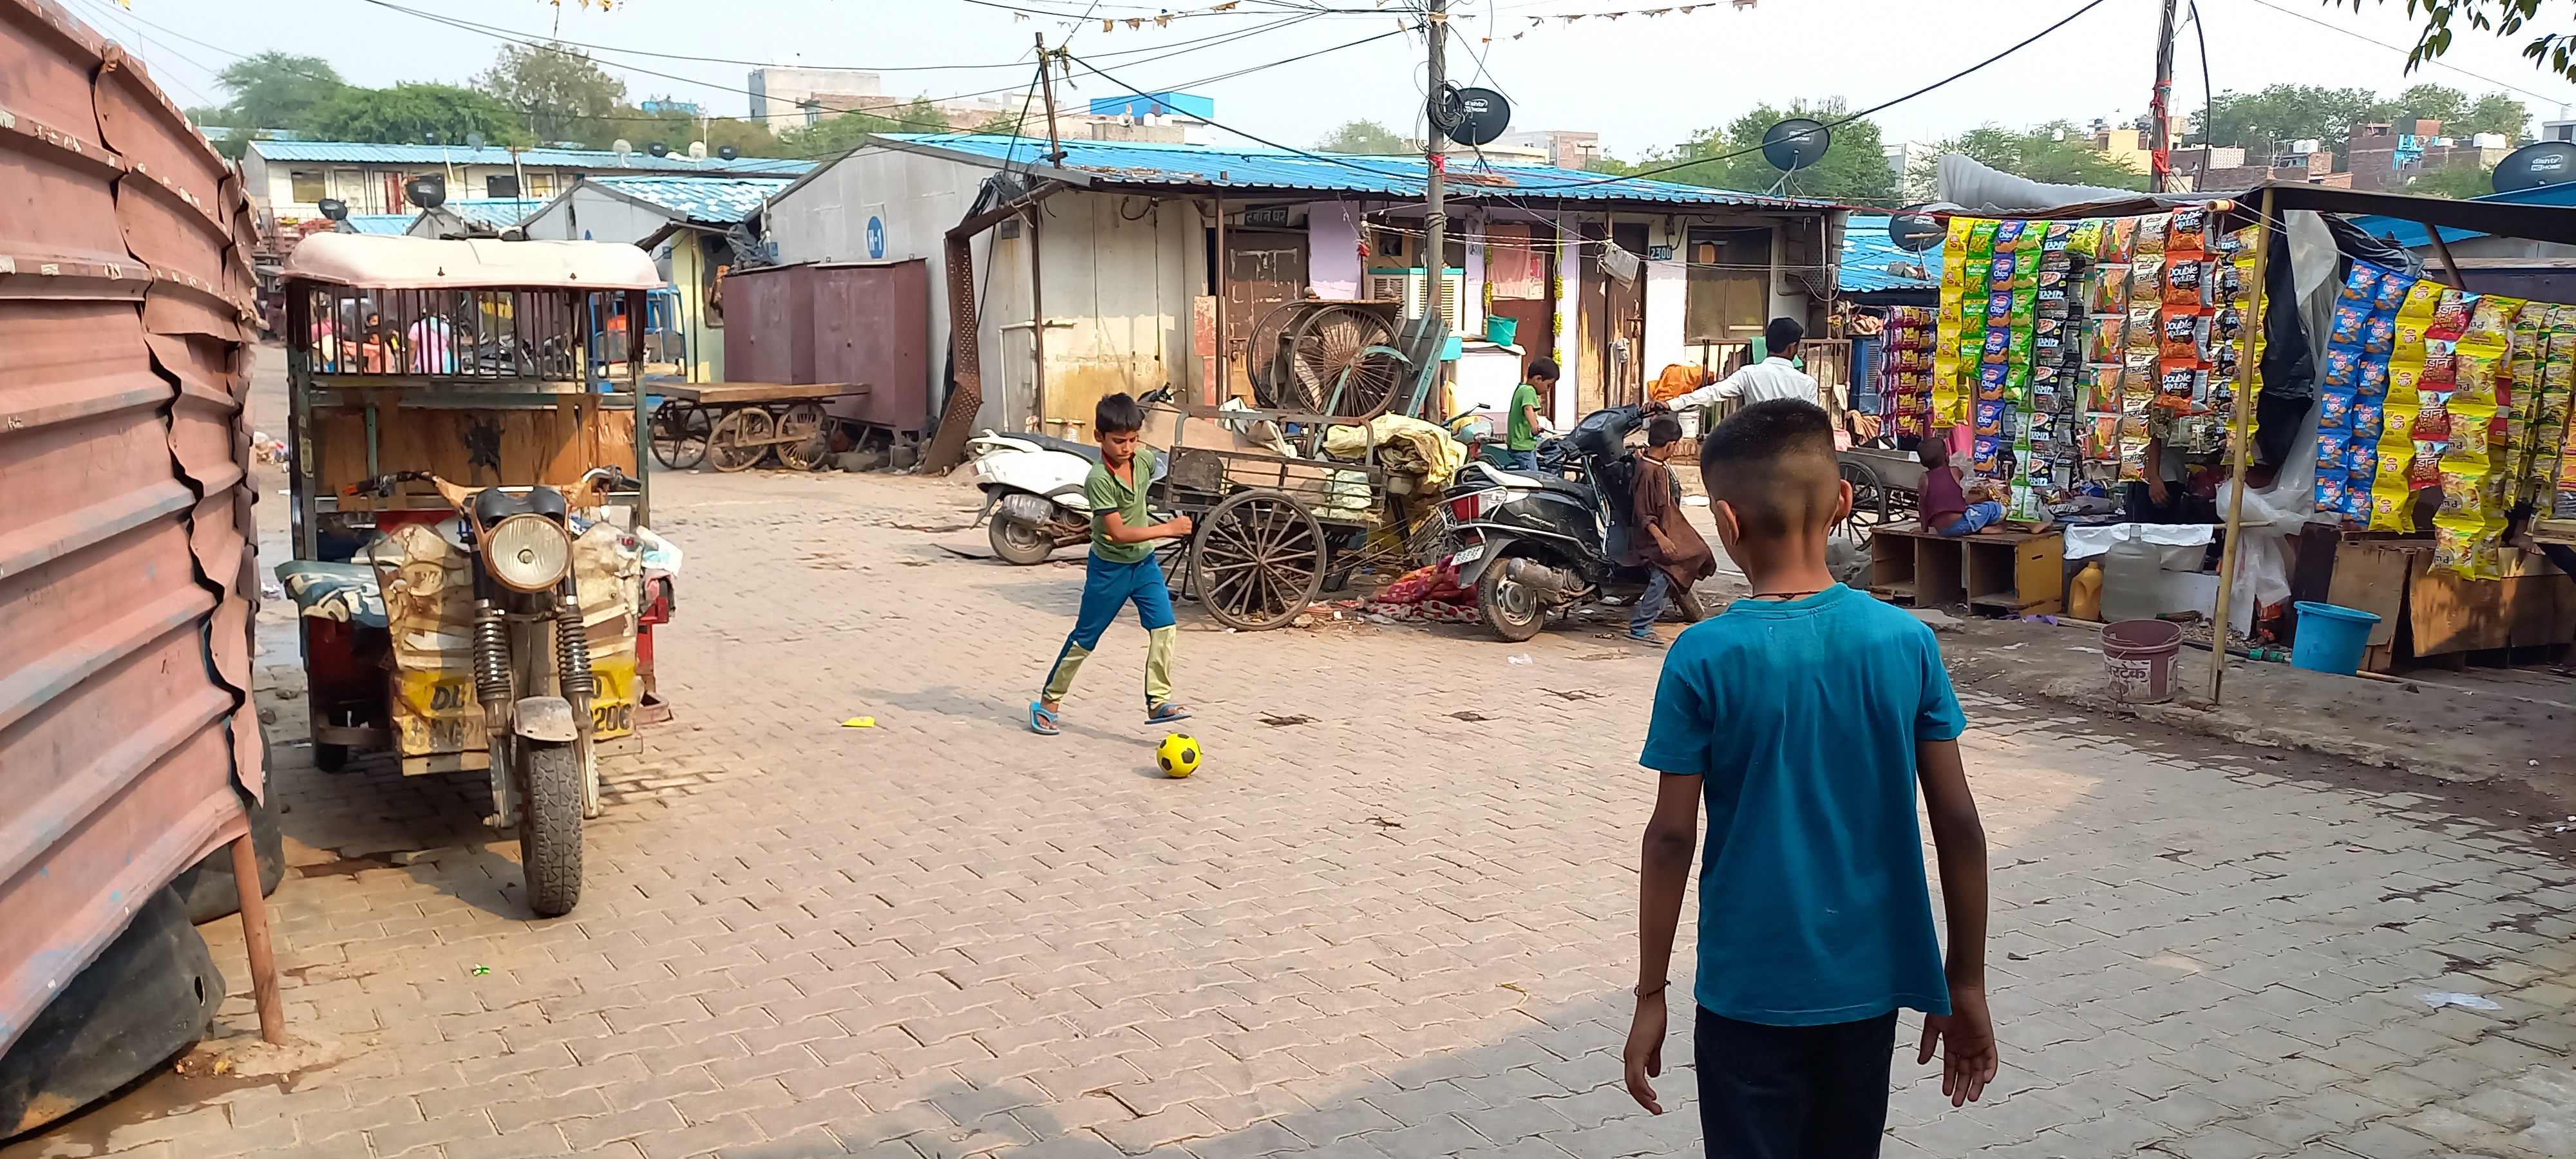 kids playing football in informal settlement